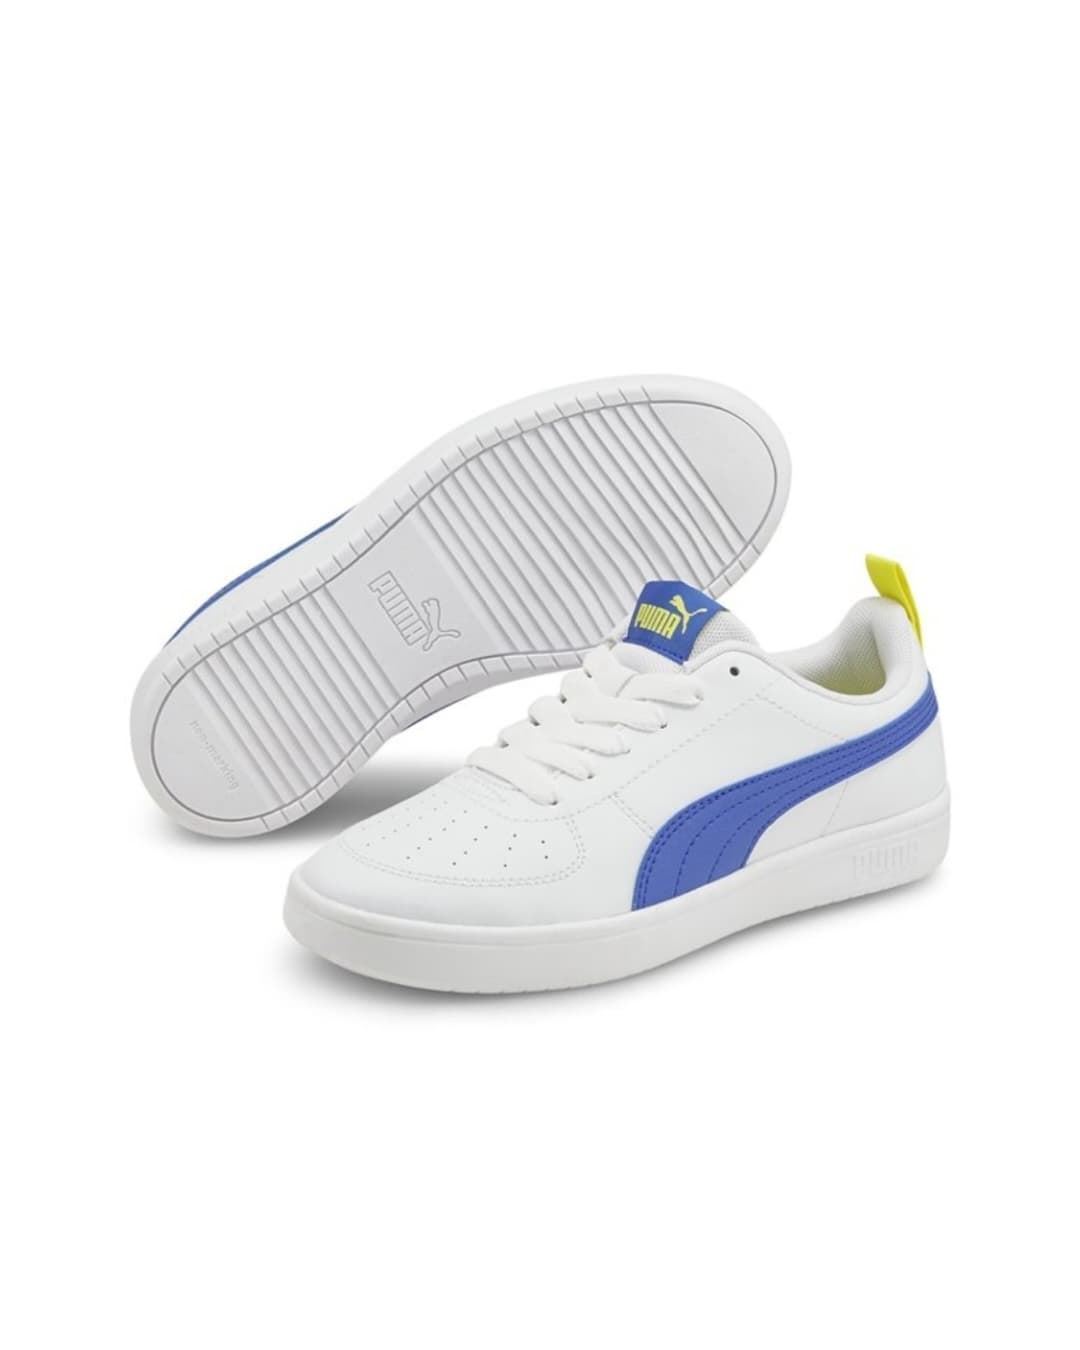 offer White sneakers Puma children\'s / Jr Blue Rickie